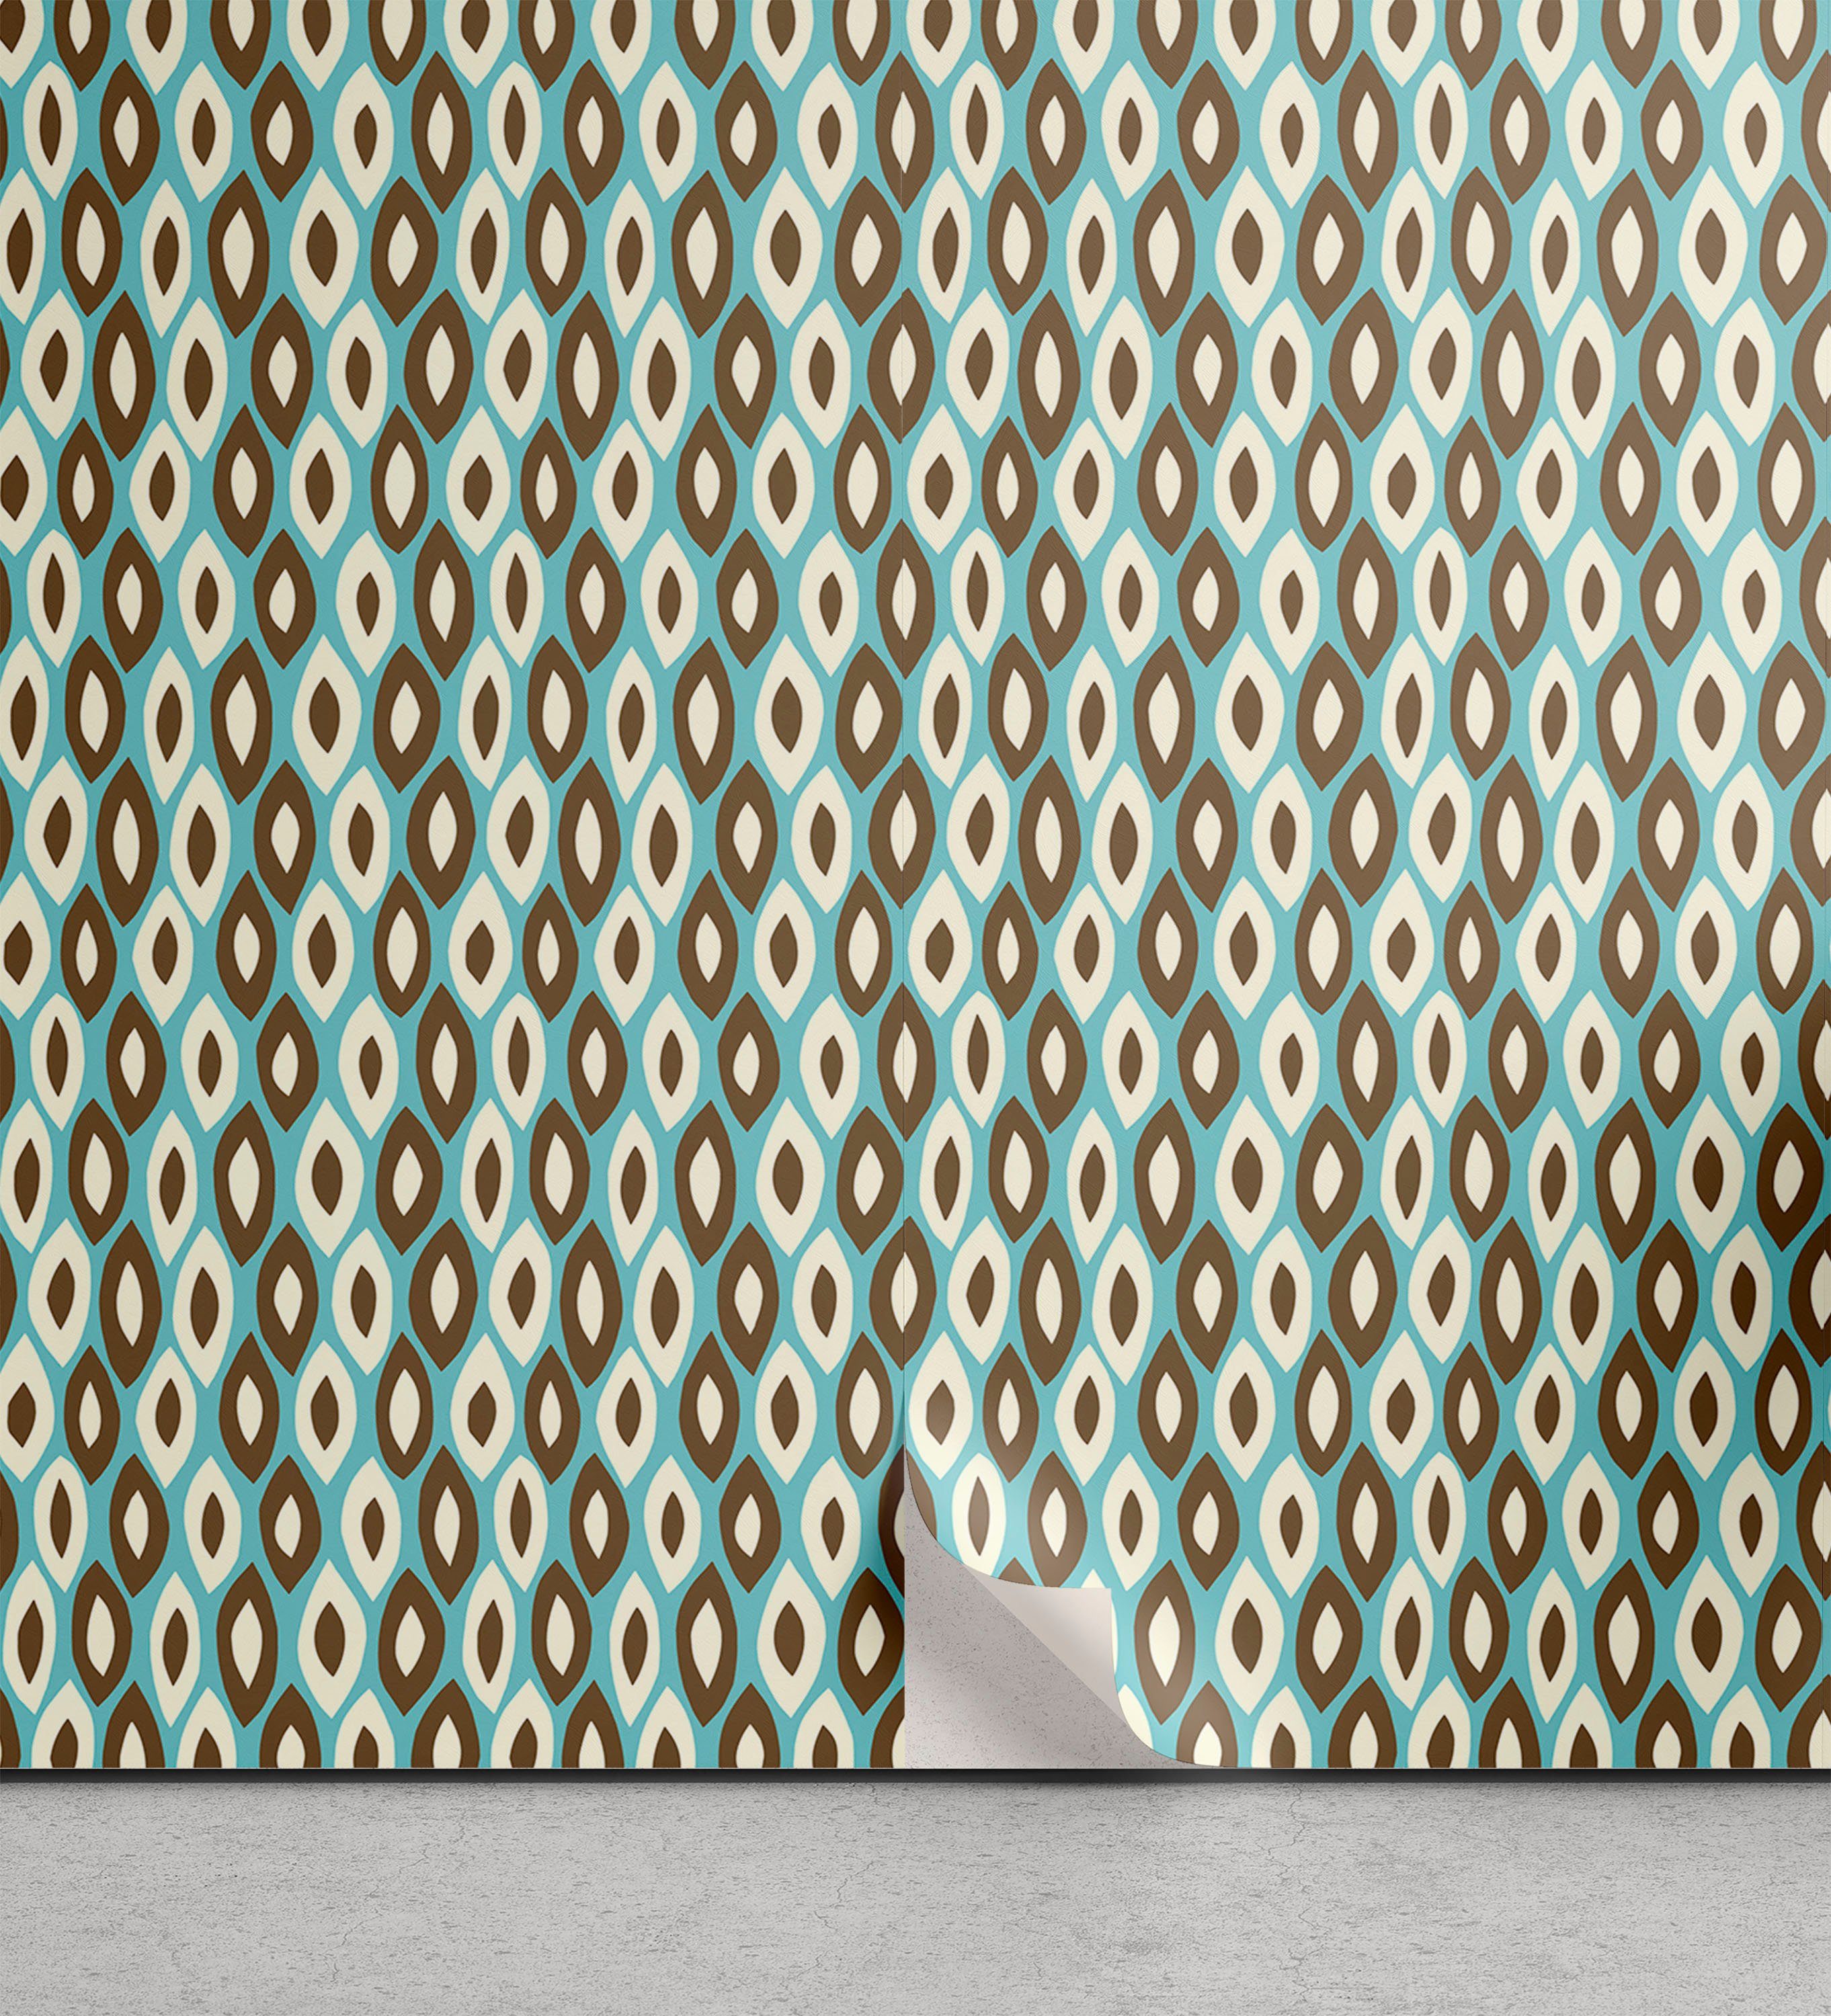 Abakuhaus Küchenakzent, Wohnzimmer Simplistic Vinyltapete selbstklebendes Retro Formen ovale